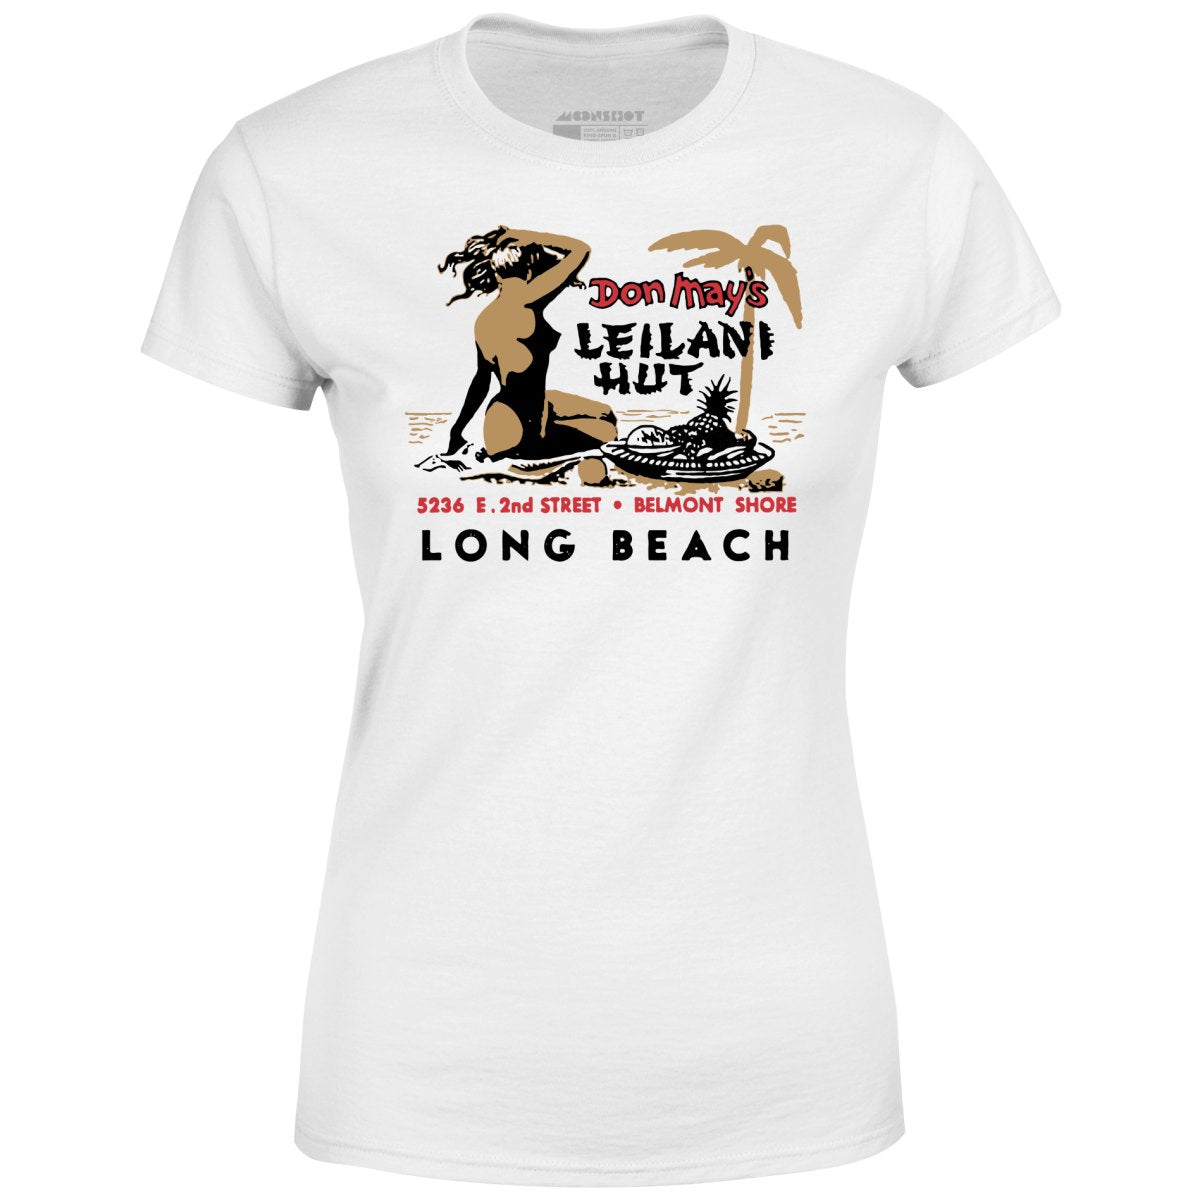 Don May's Leilani Hut - Belmont Shore, CA - Vintage Tiki Bar - Women's T-Shirt